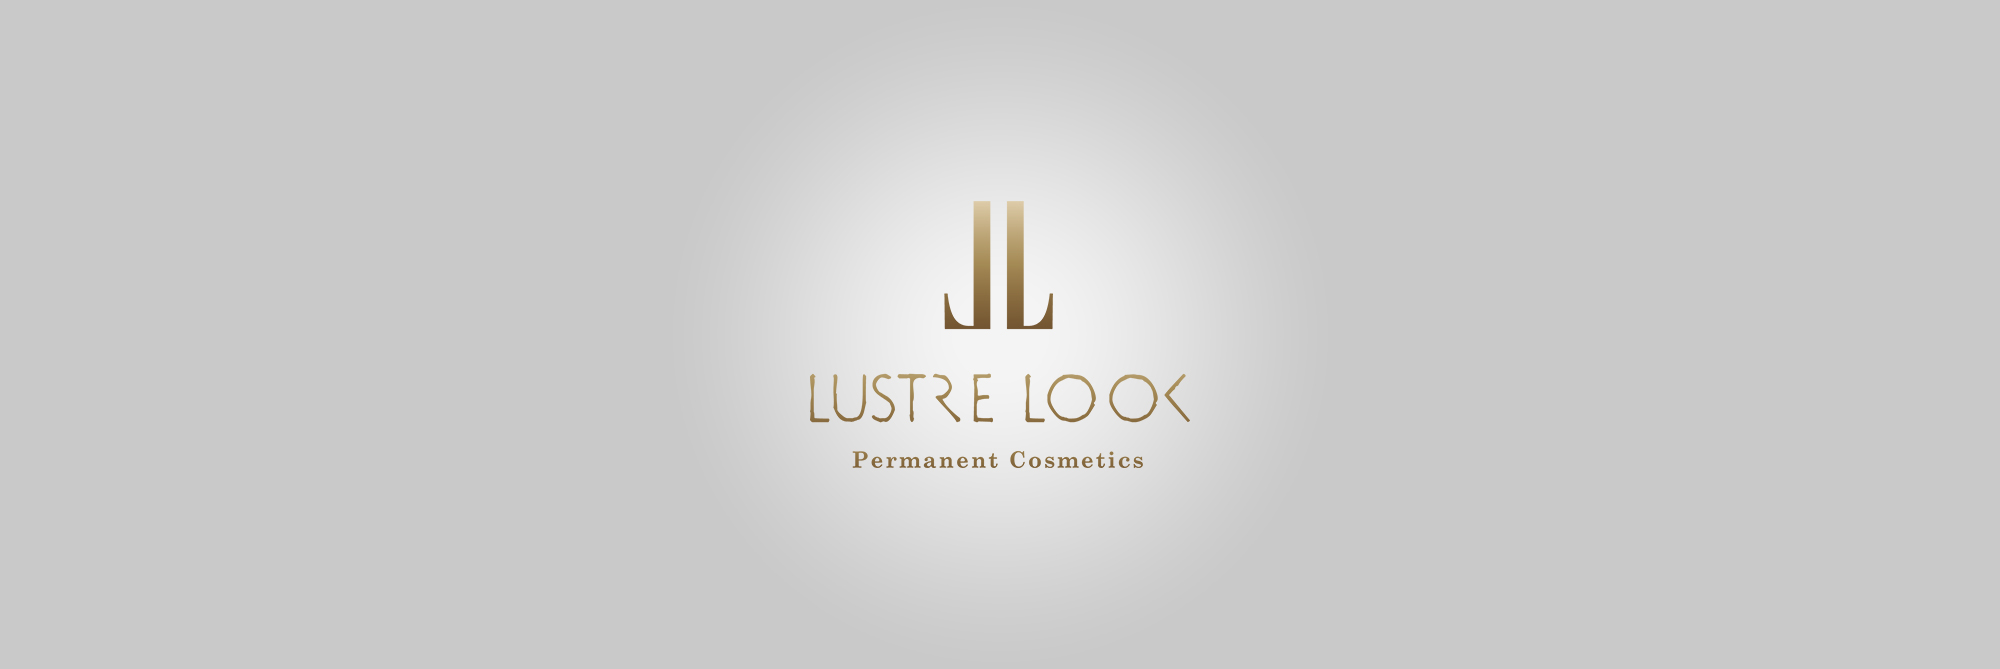 Lustre Look Permanent Cosmetics and Skin Aesthetics